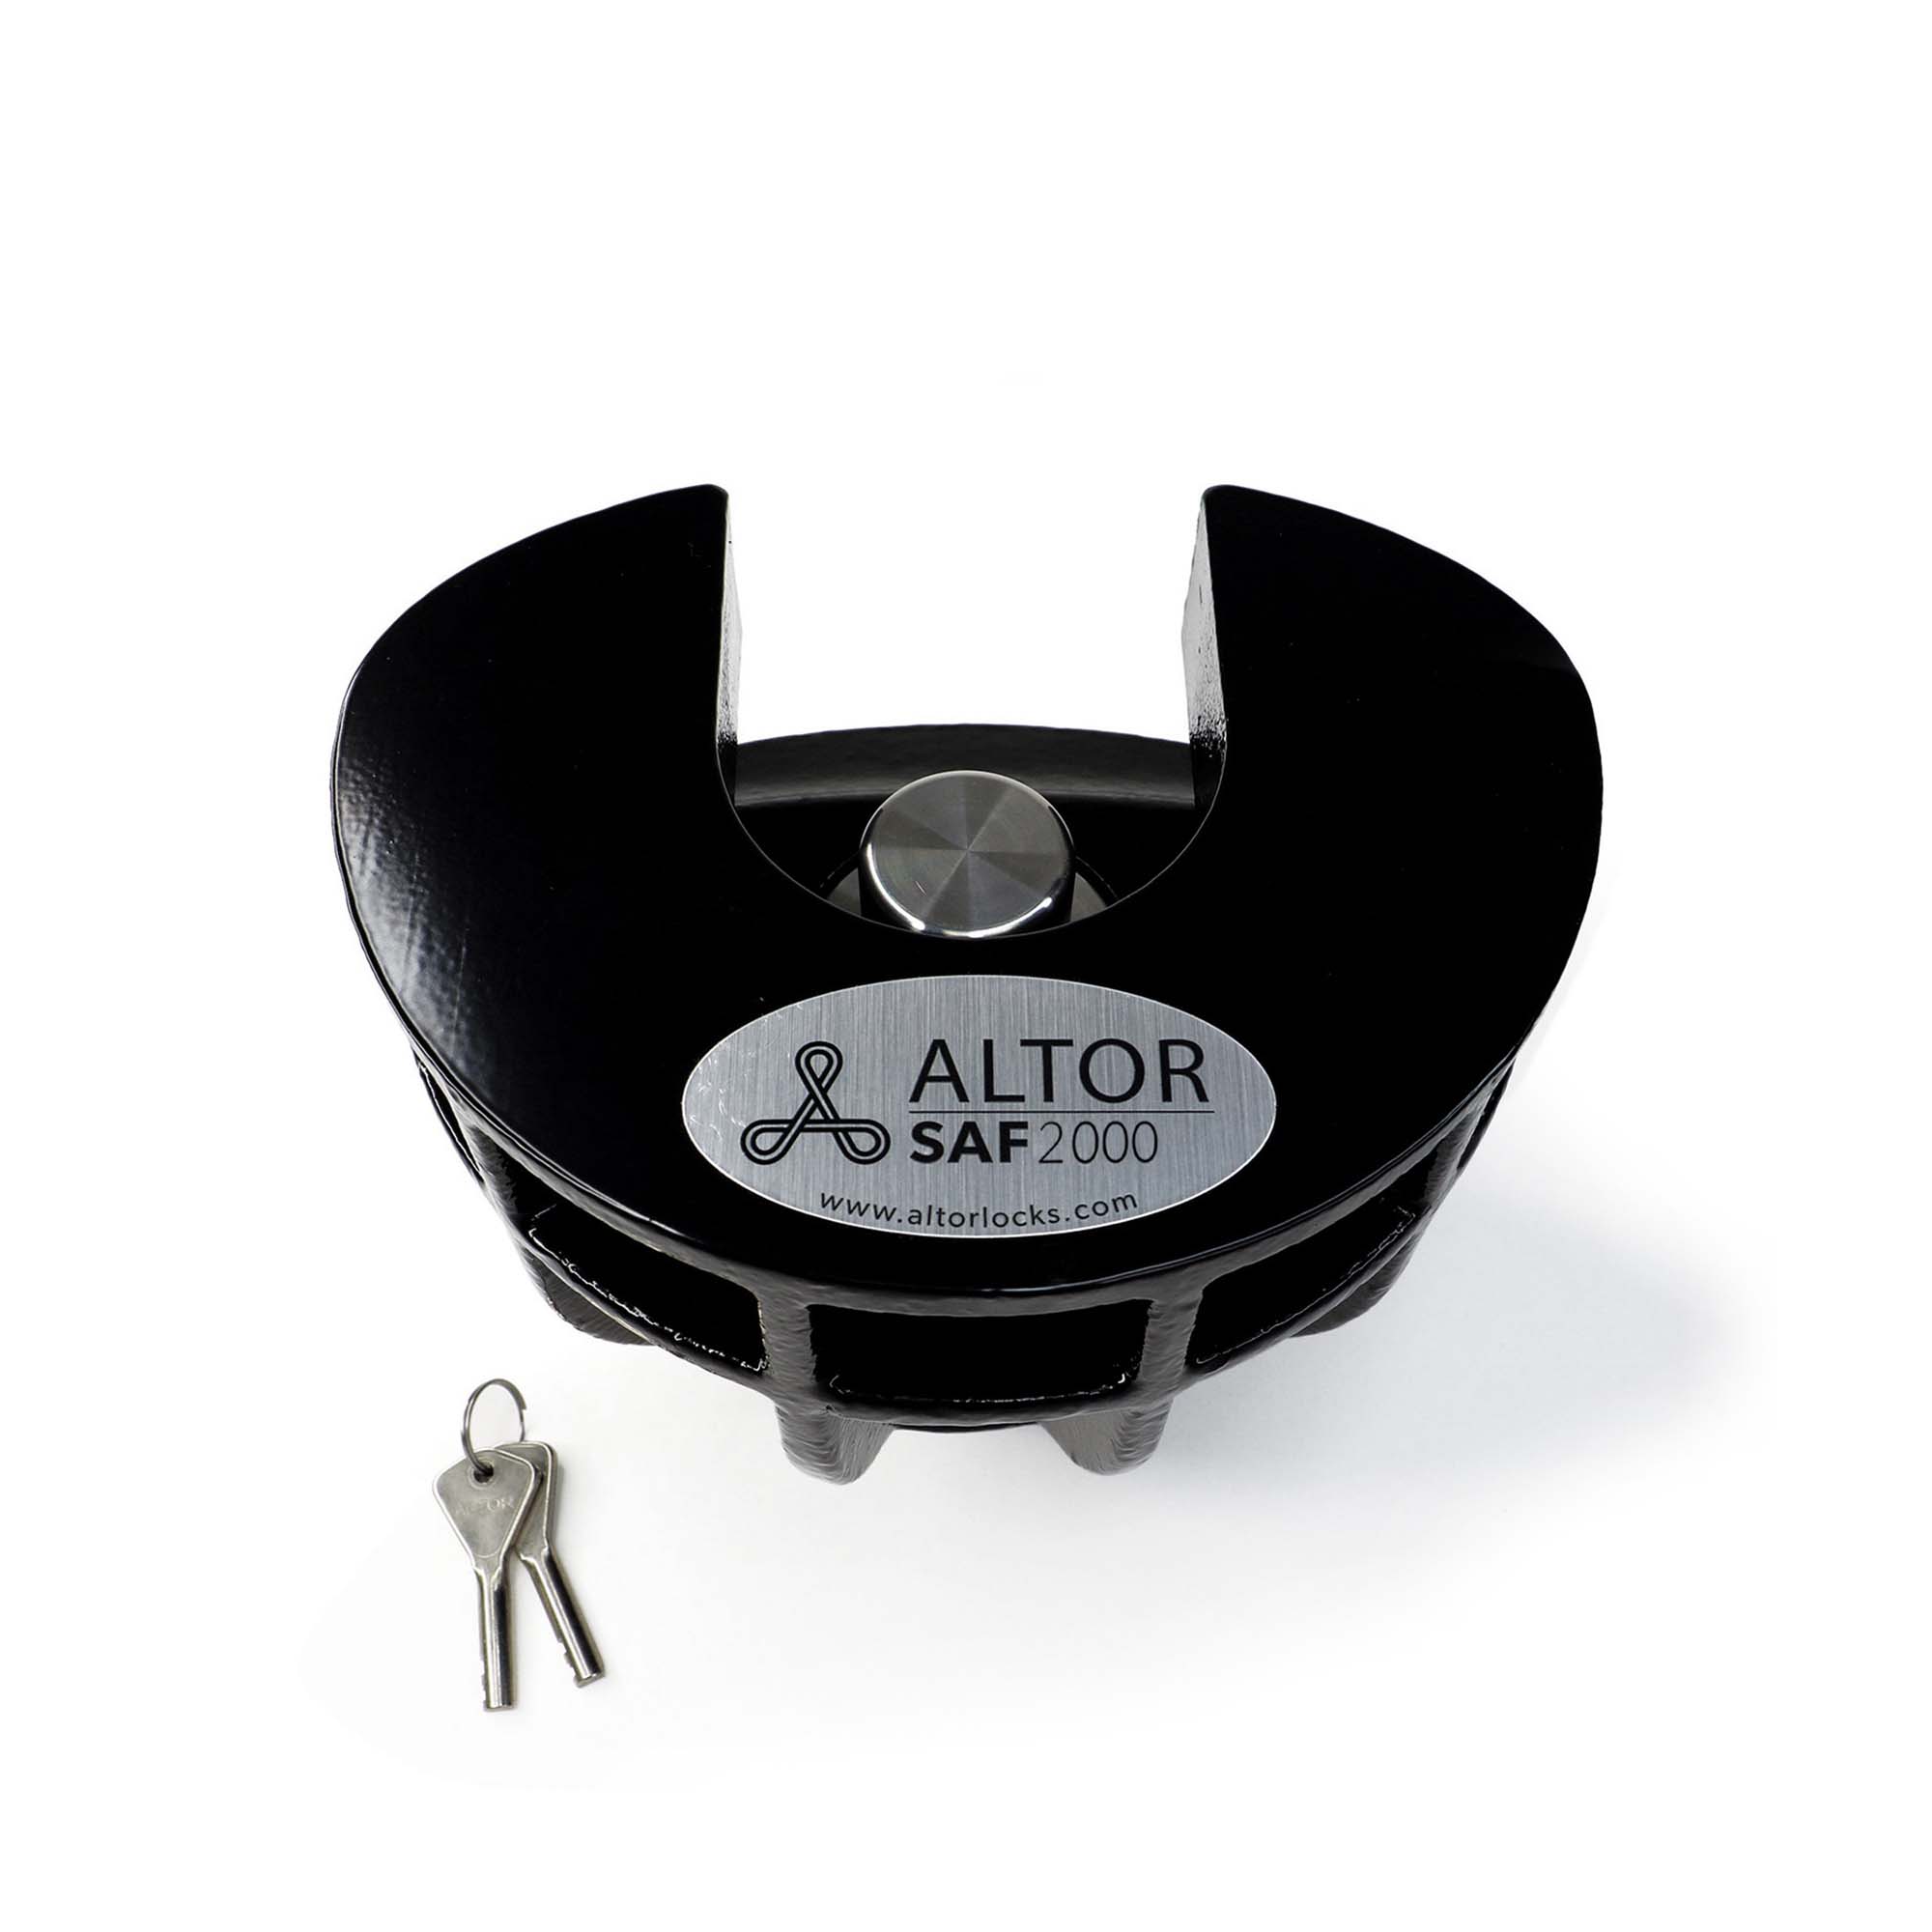 Altor ICON SAF Trailer Lock